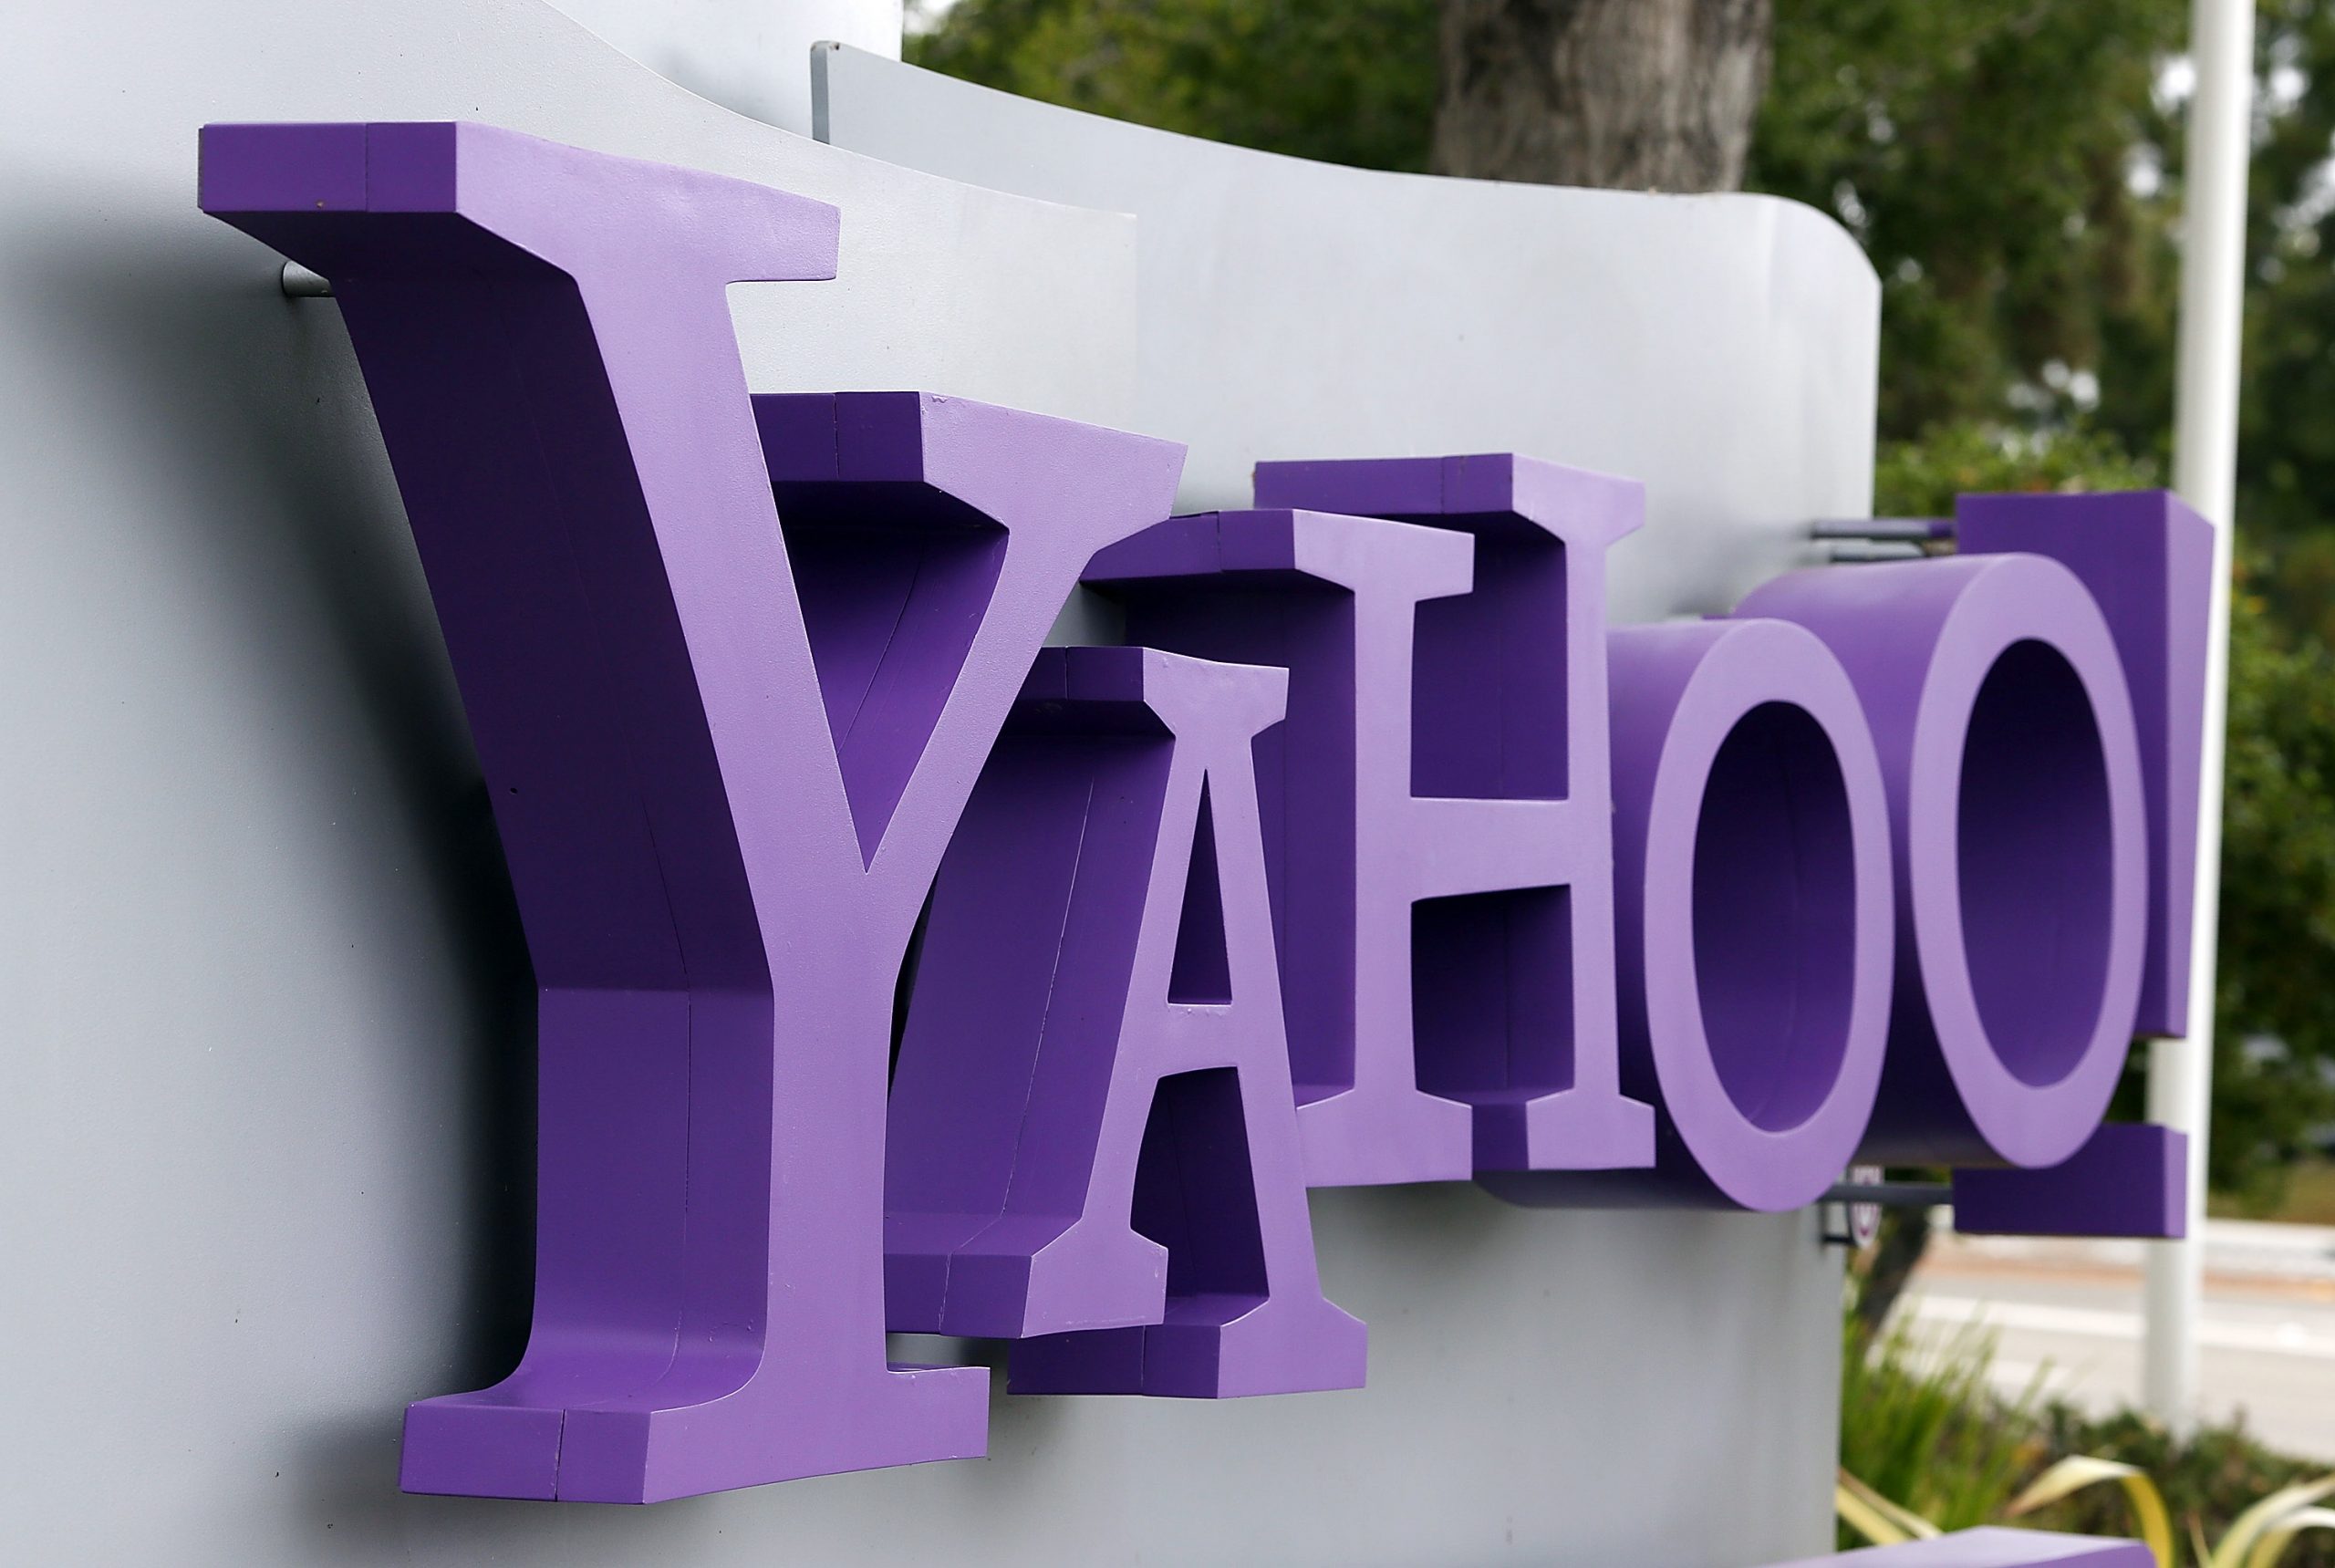 SUNNYVALE, CA - JULY 17: The Yahoo logo is displayed